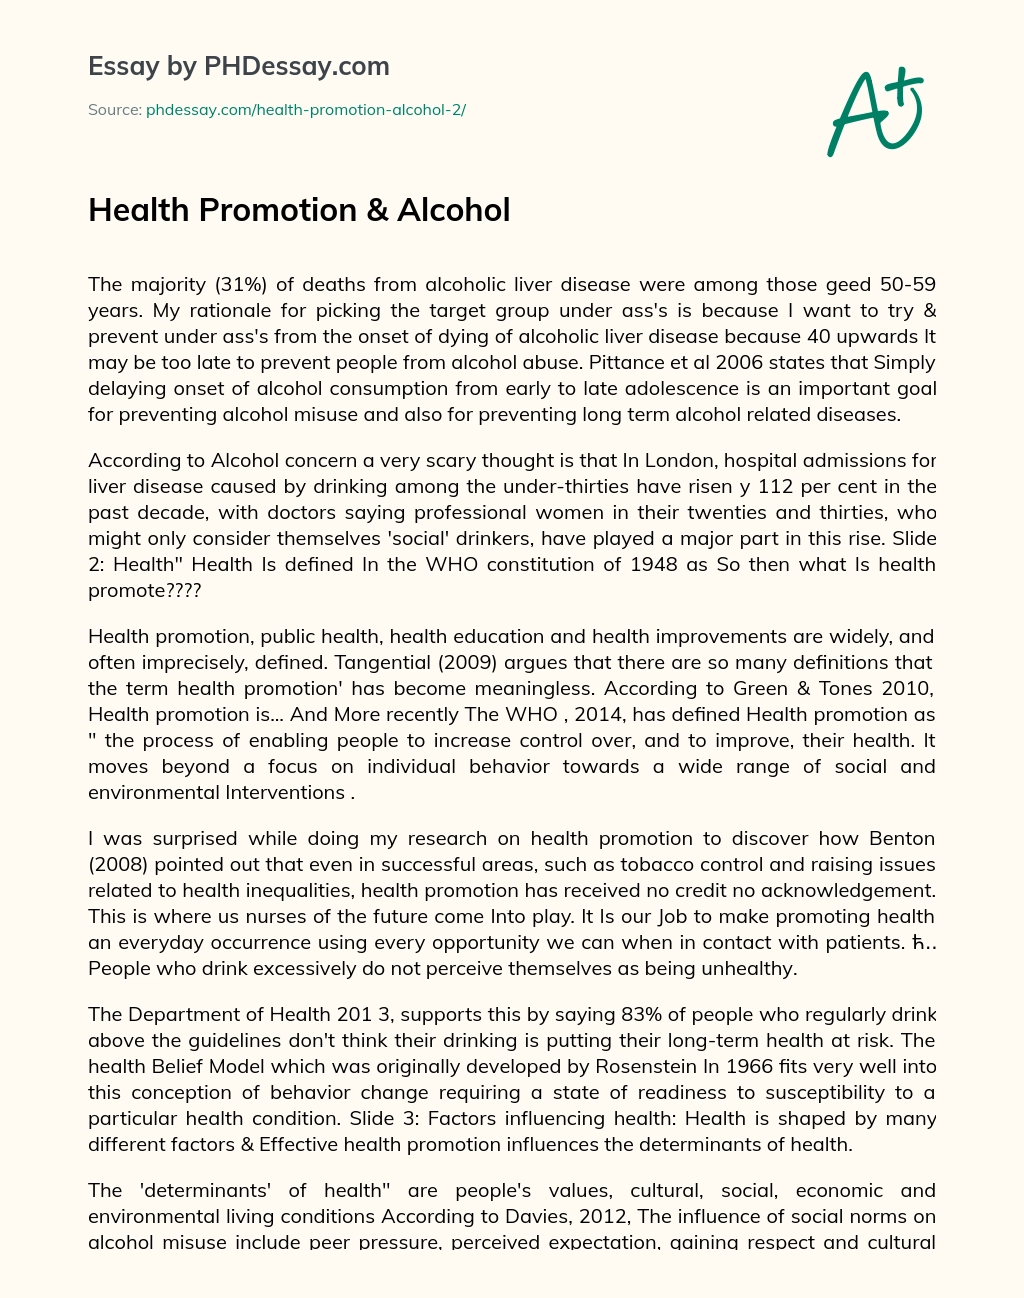 Health Promotion & Alcohol essay